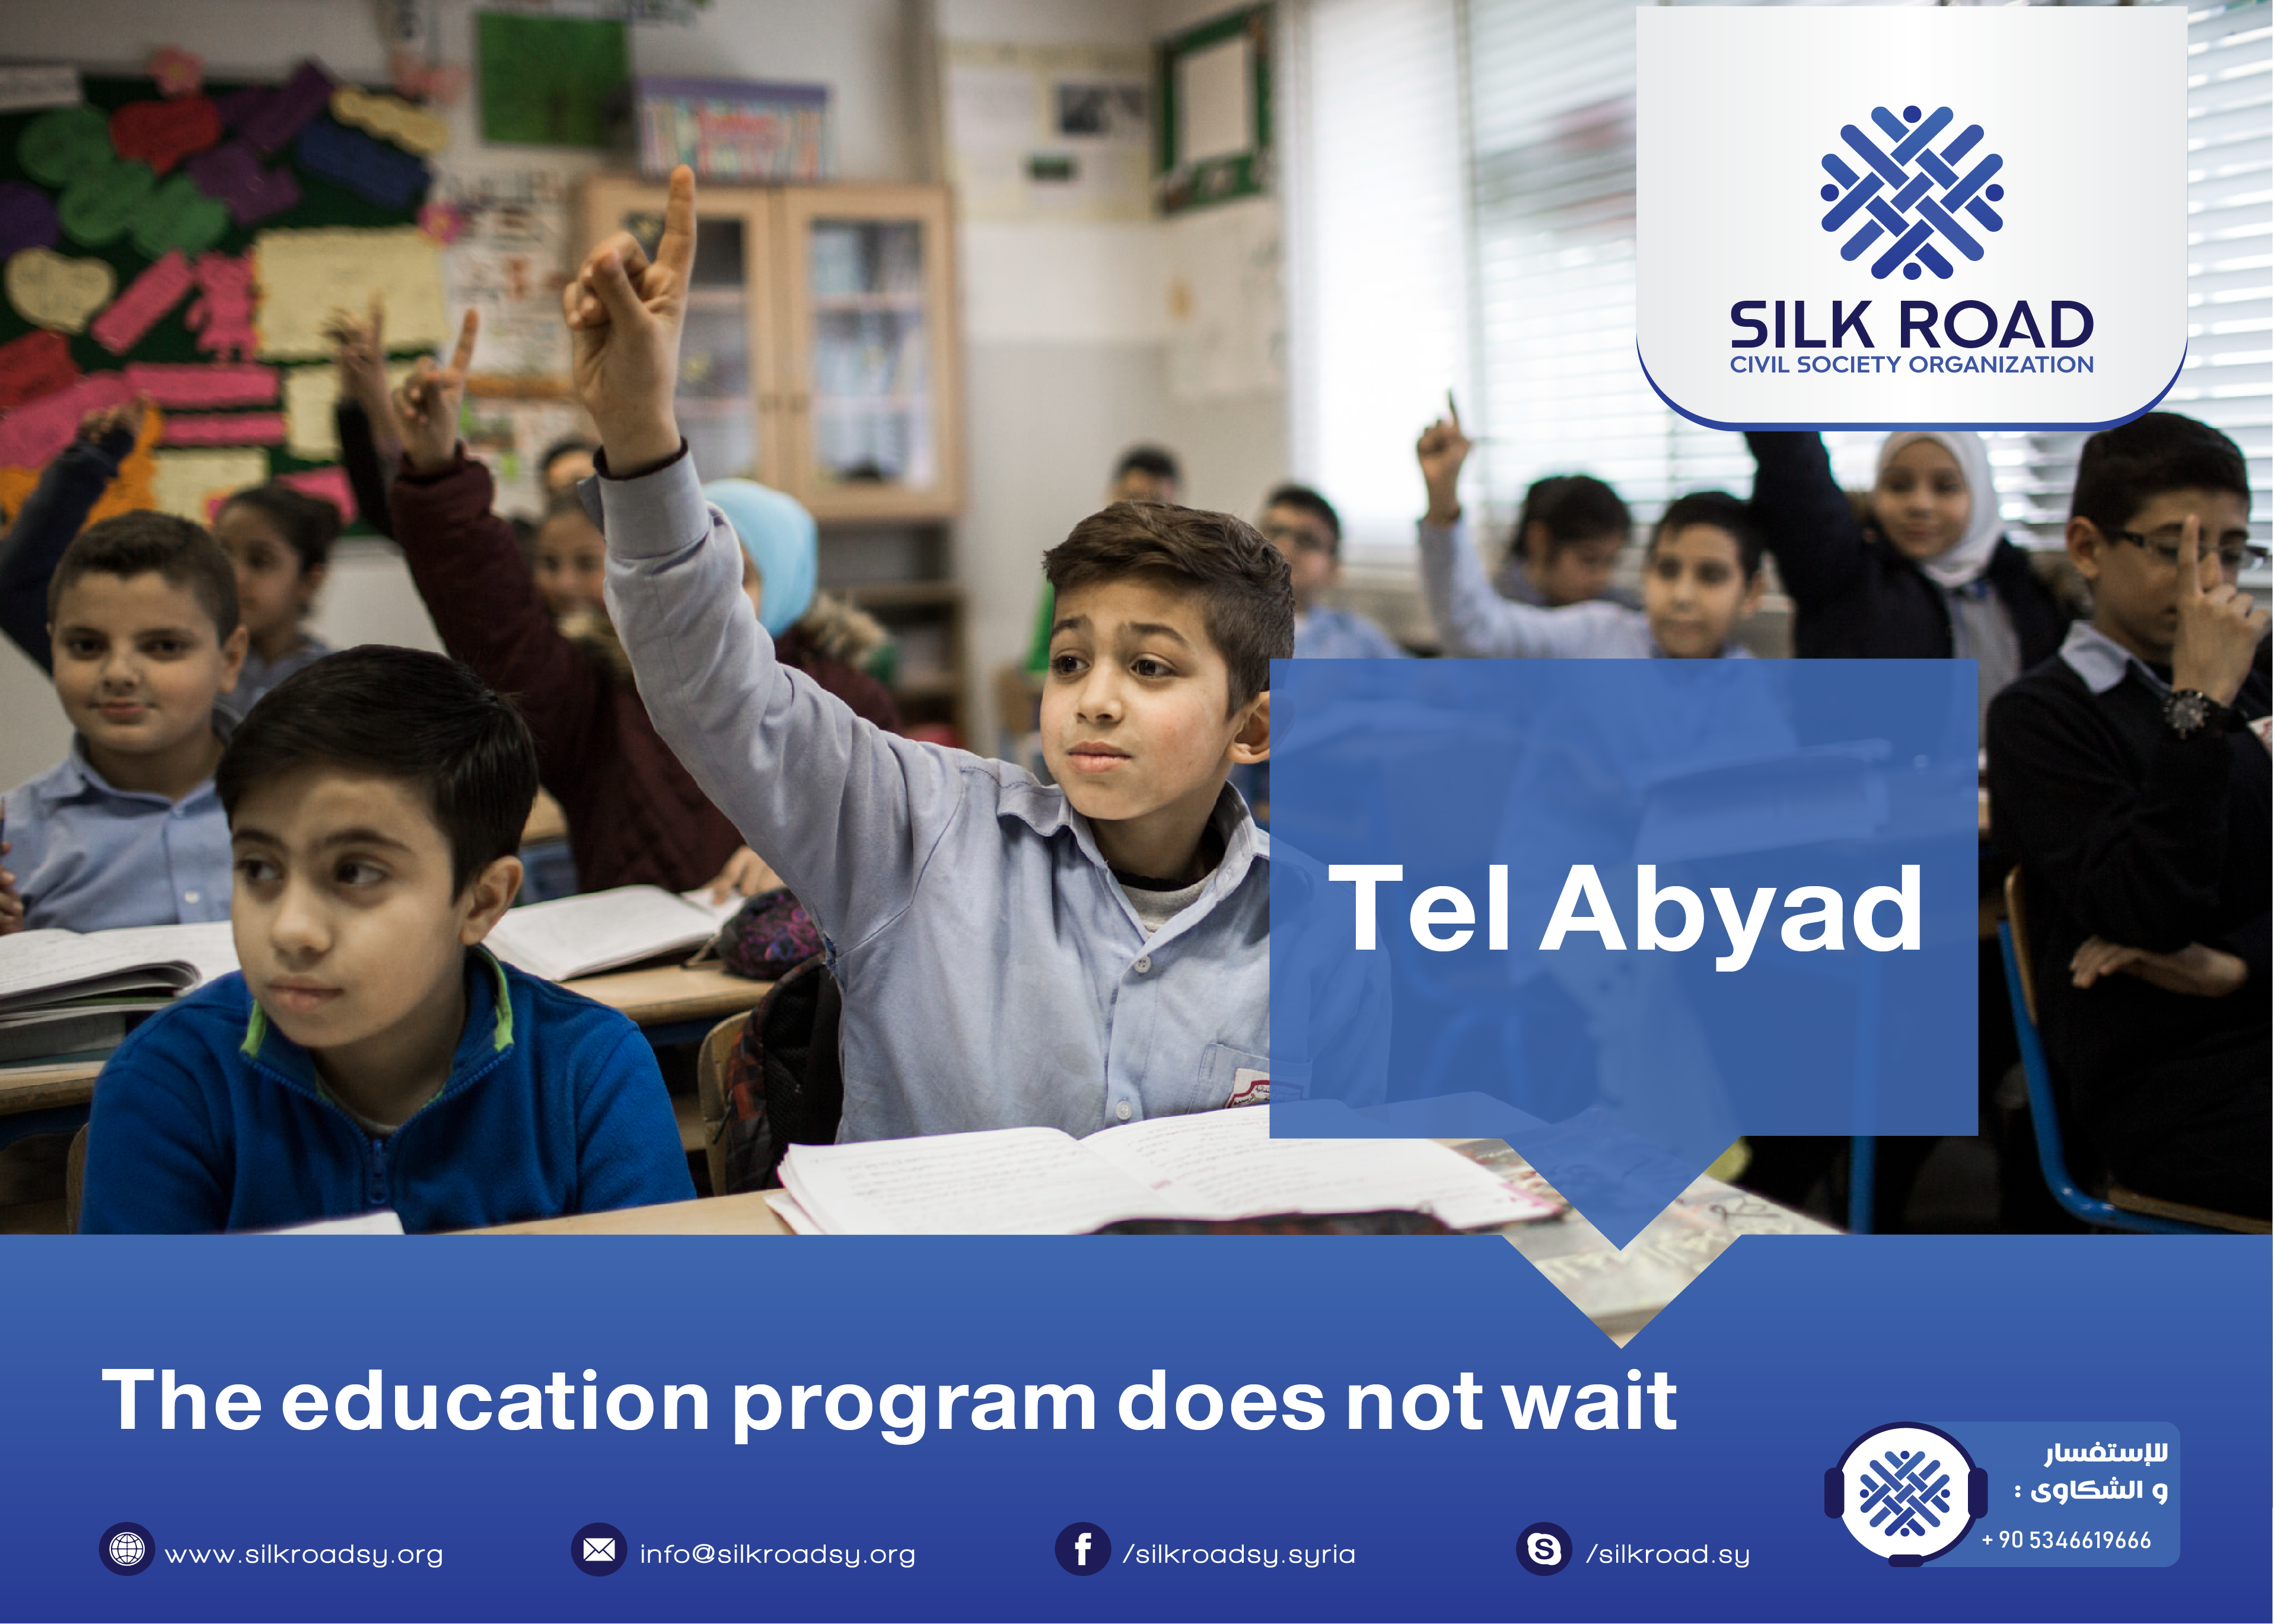 The education program does not wait - Tel Abyad